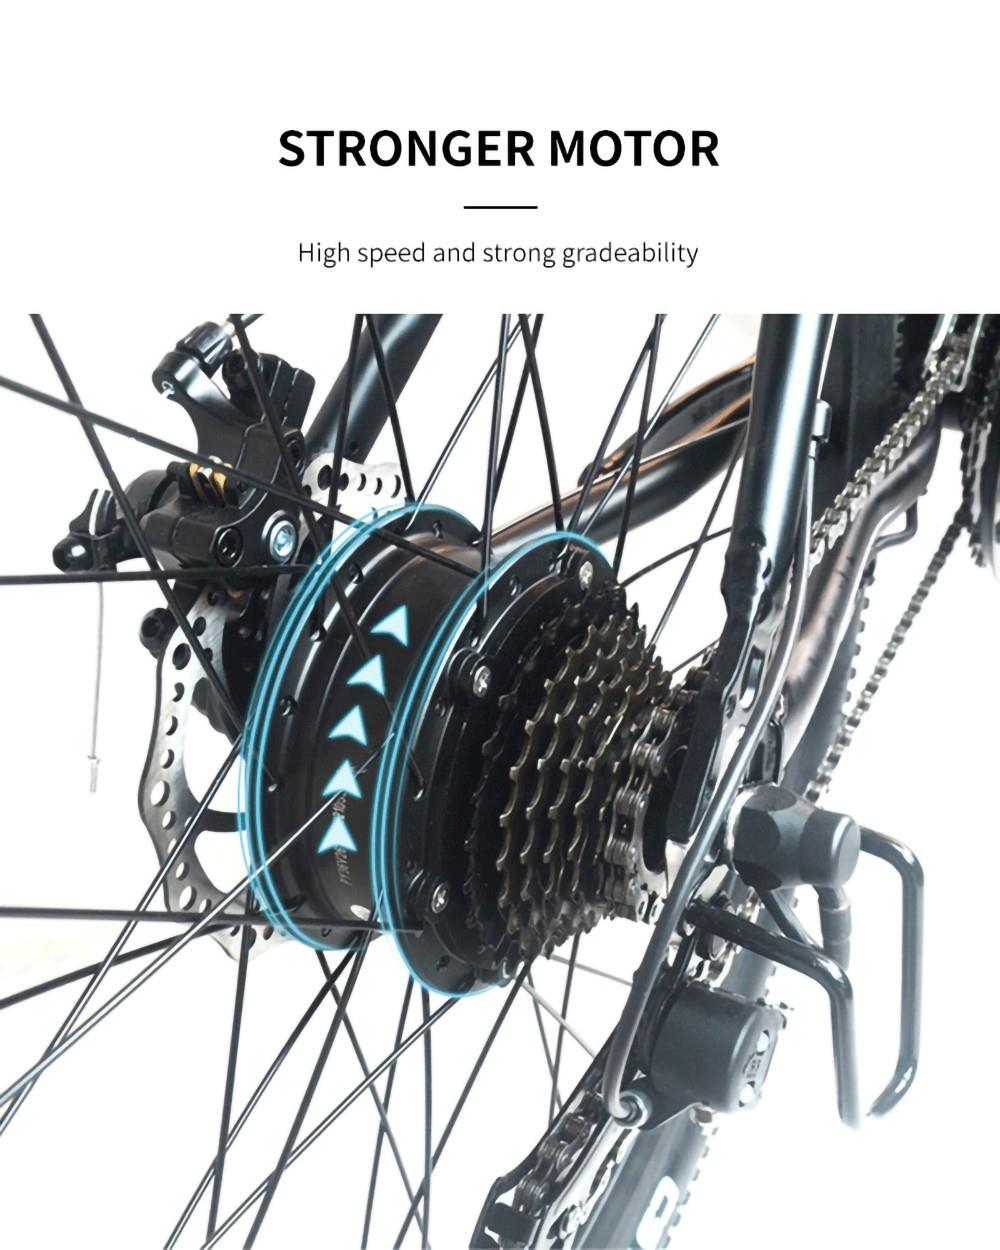 K3 elektrische fiets, 26 * 1.95 inch band 350 W motor 36 V 10.4 Ah batterij 32 km / u maximale snelheid 120 kg belasting schijfrem - blauw